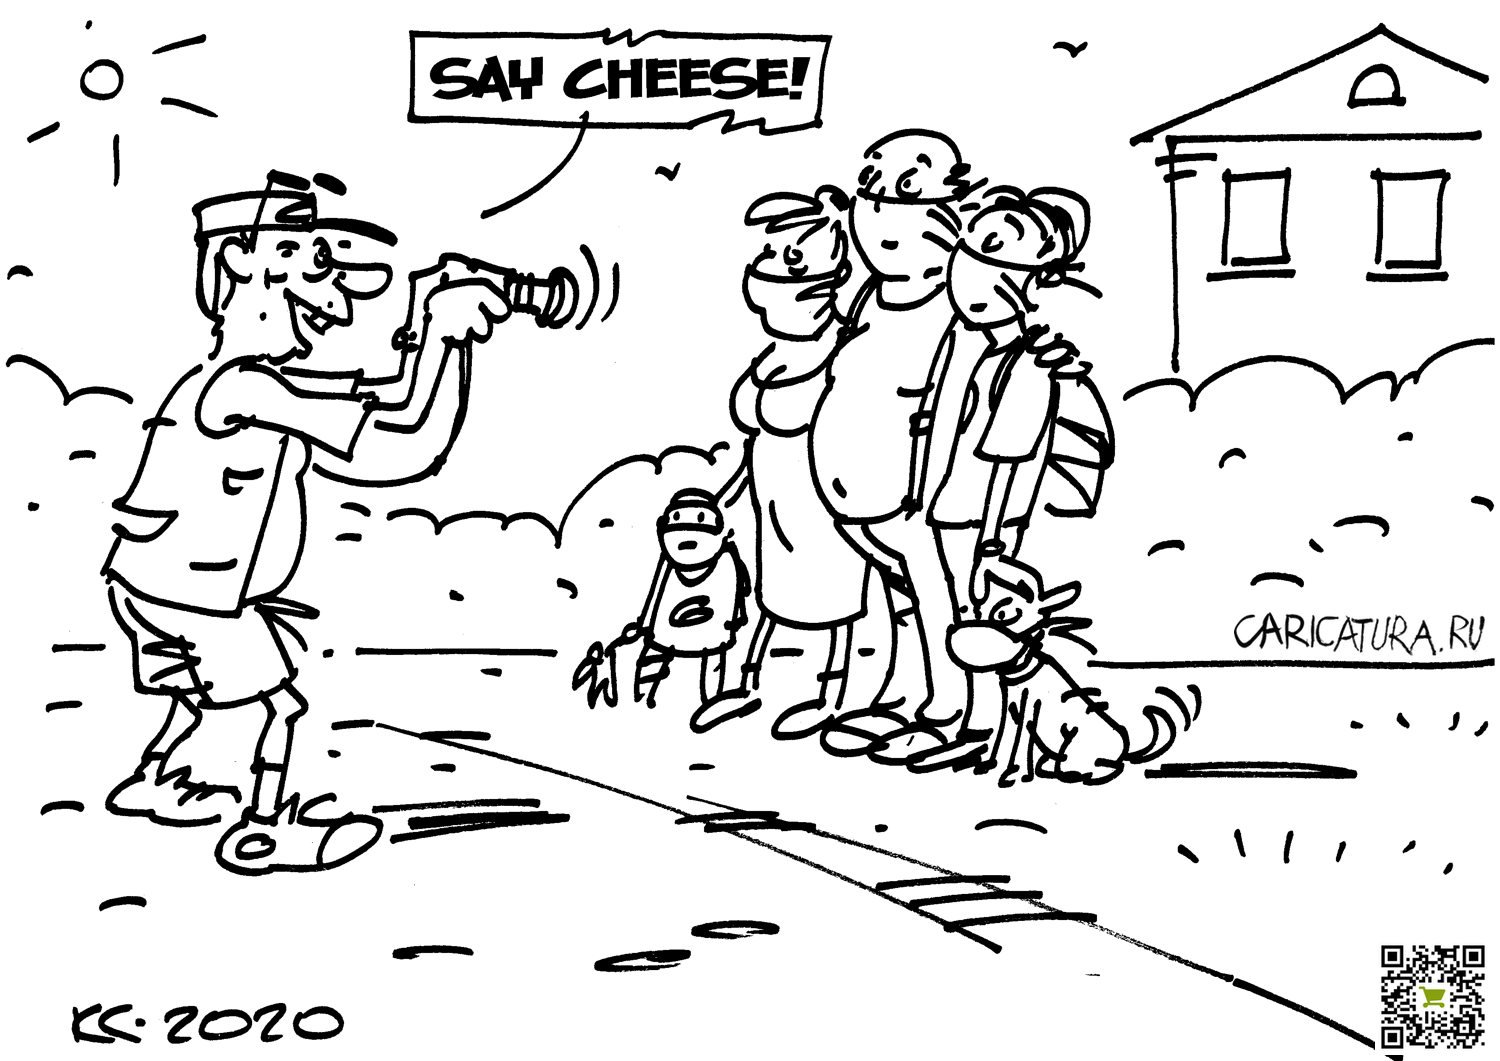 Карикатура "Say cheese!", Вячеслав Капрельянц